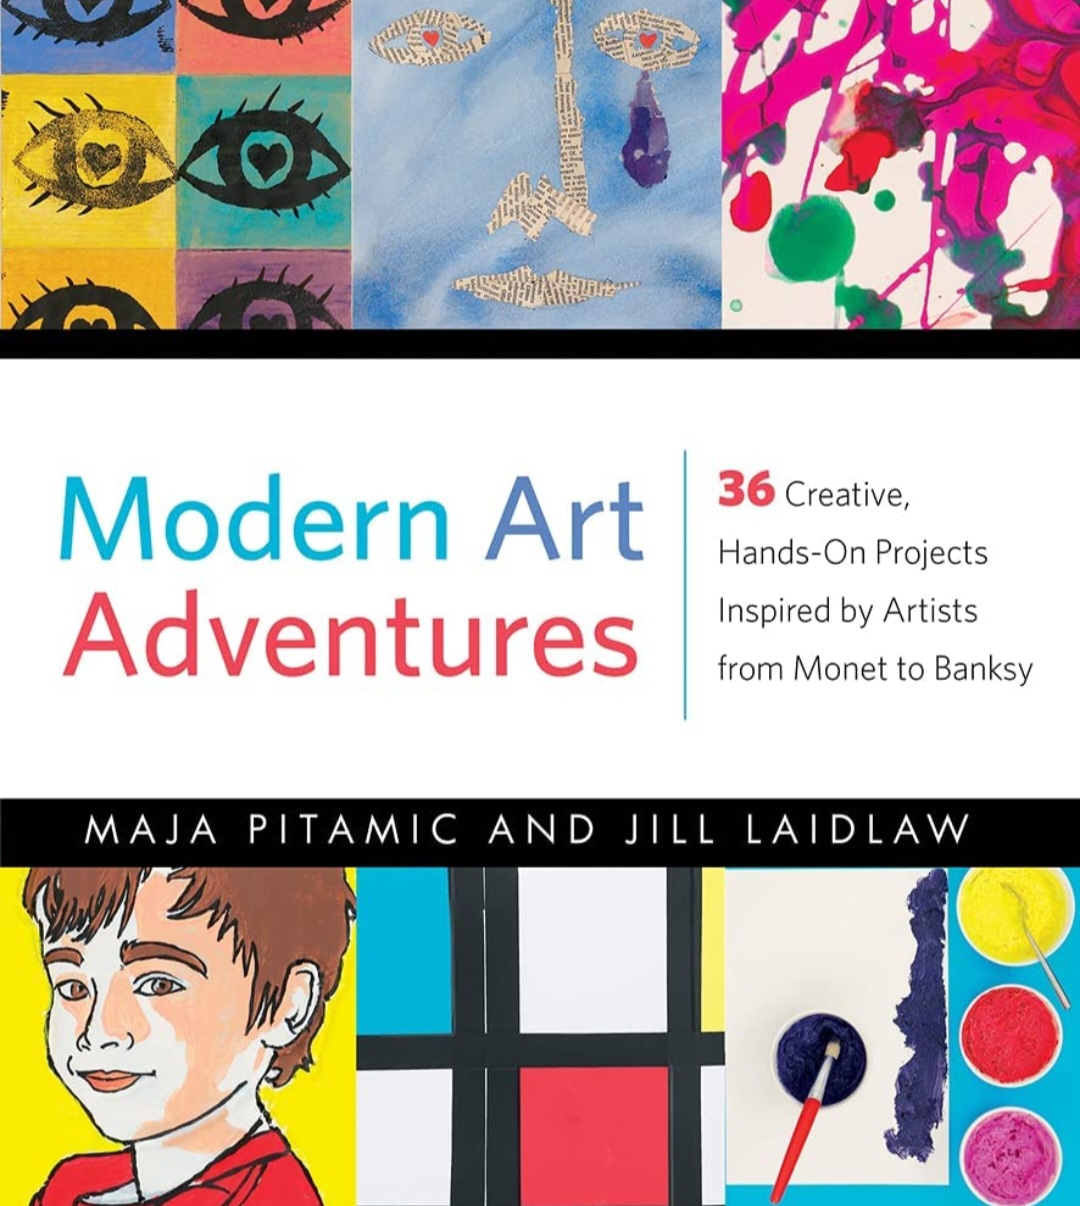 https://www.kidsartbox.com/img/blog/books-about-pacita-abad/5.modern-art-adventures.jpg